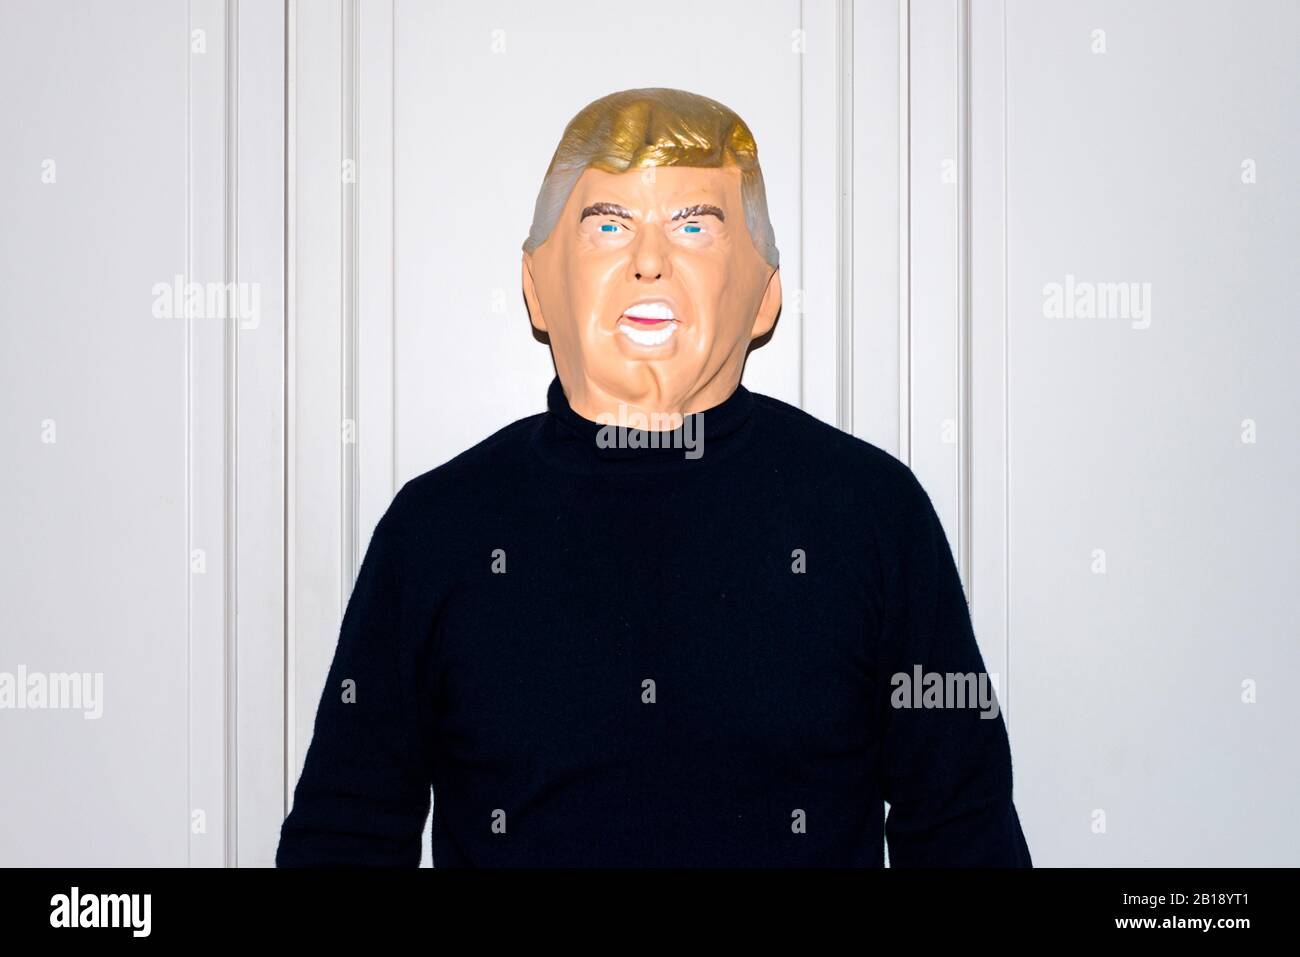 Man wearing Donald Trump latex mask Stock Photo